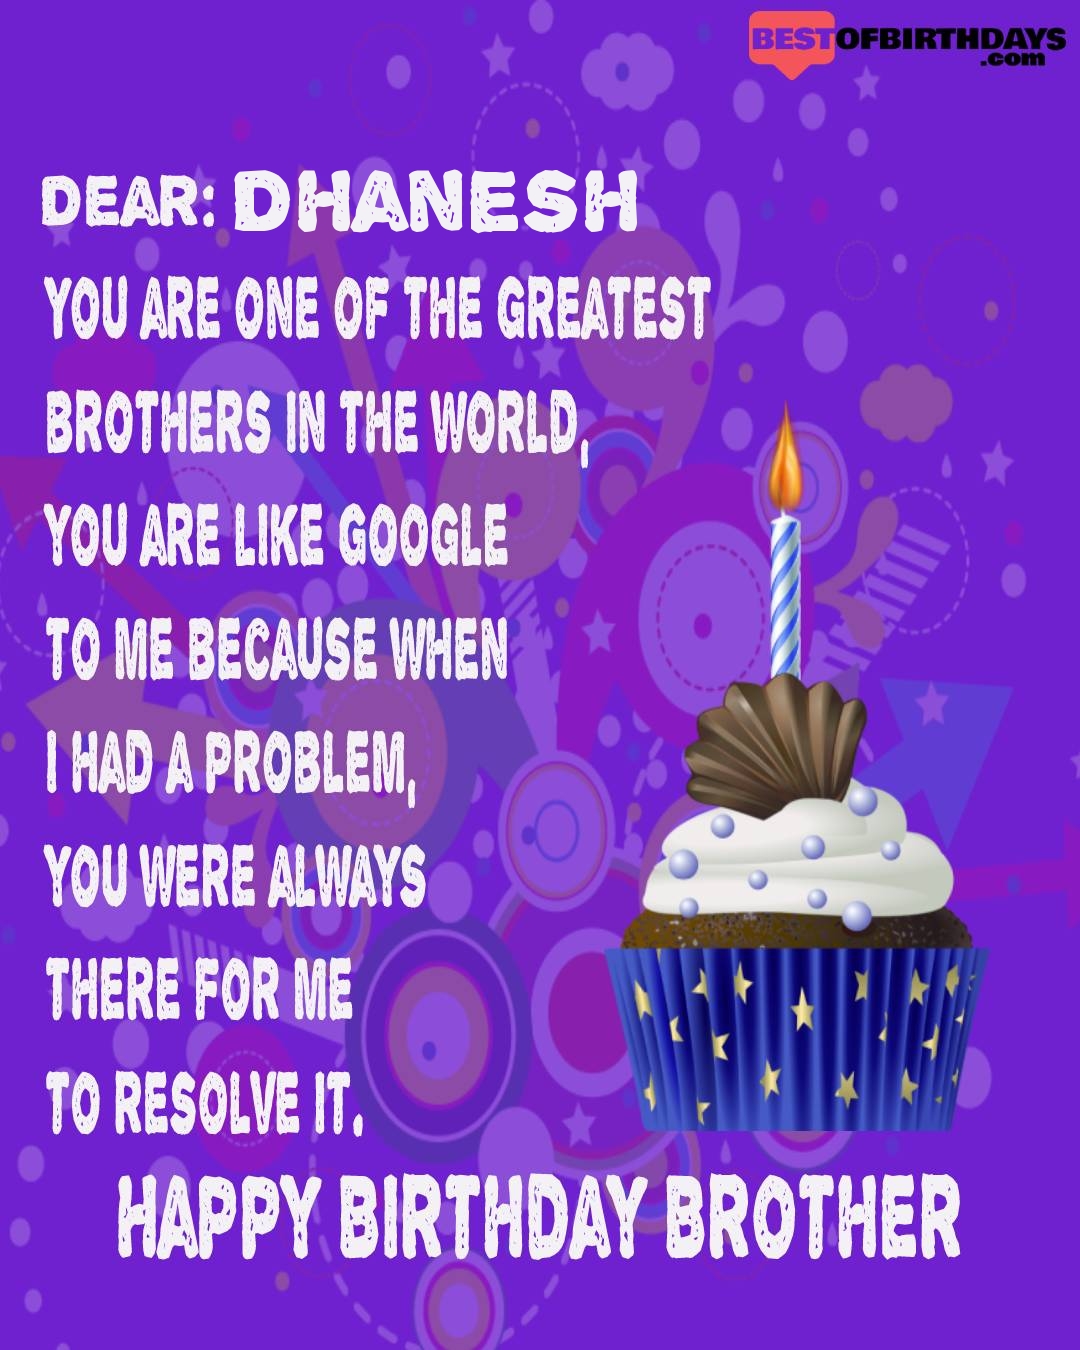 Happy birthday dhanesh bhai brother bro